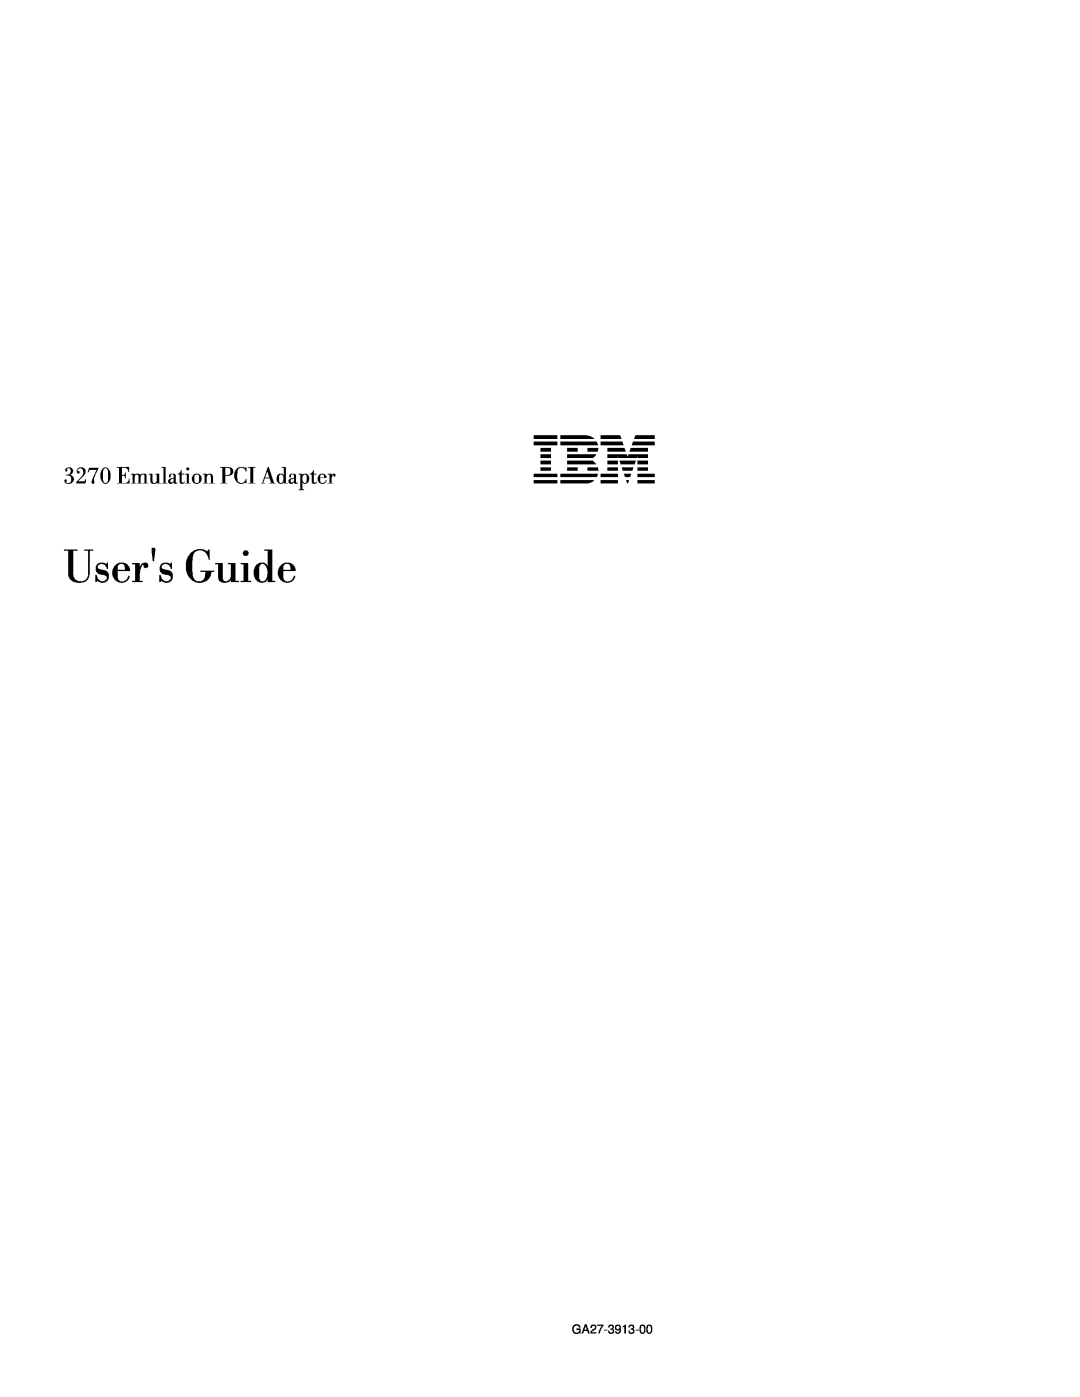 IBM 3270 manual Users Guide, Emulation PCI Adapter 